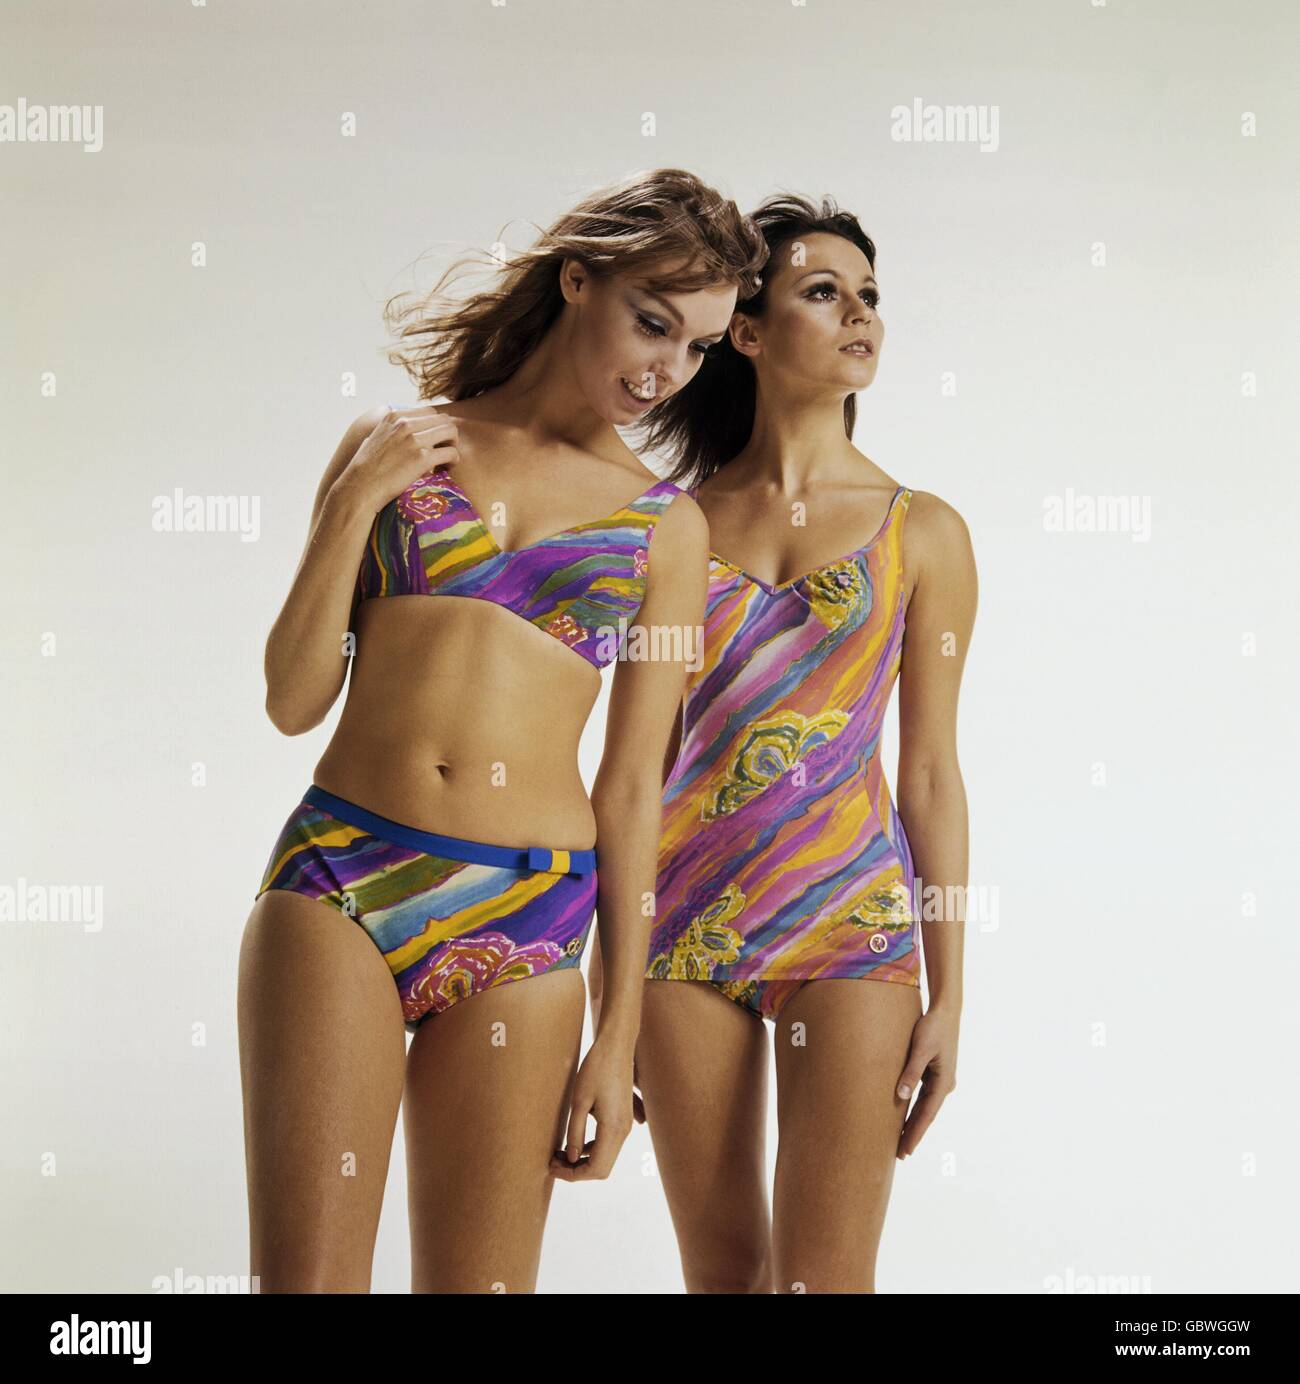 1970s Bikini Fotos e Imágenes de stock - Alamy